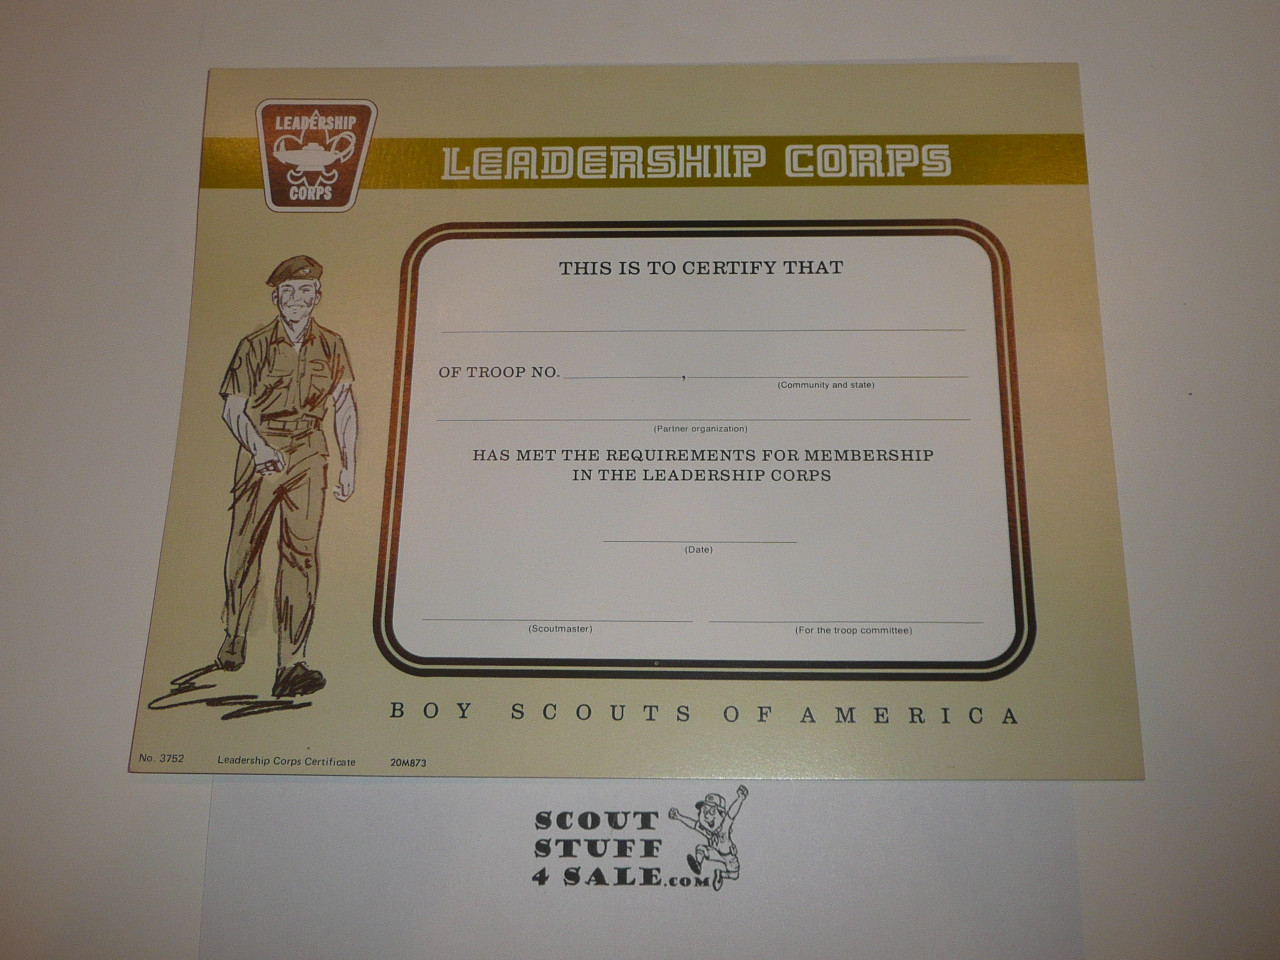 1973 Leadership Corps Warrant Certificate, blank